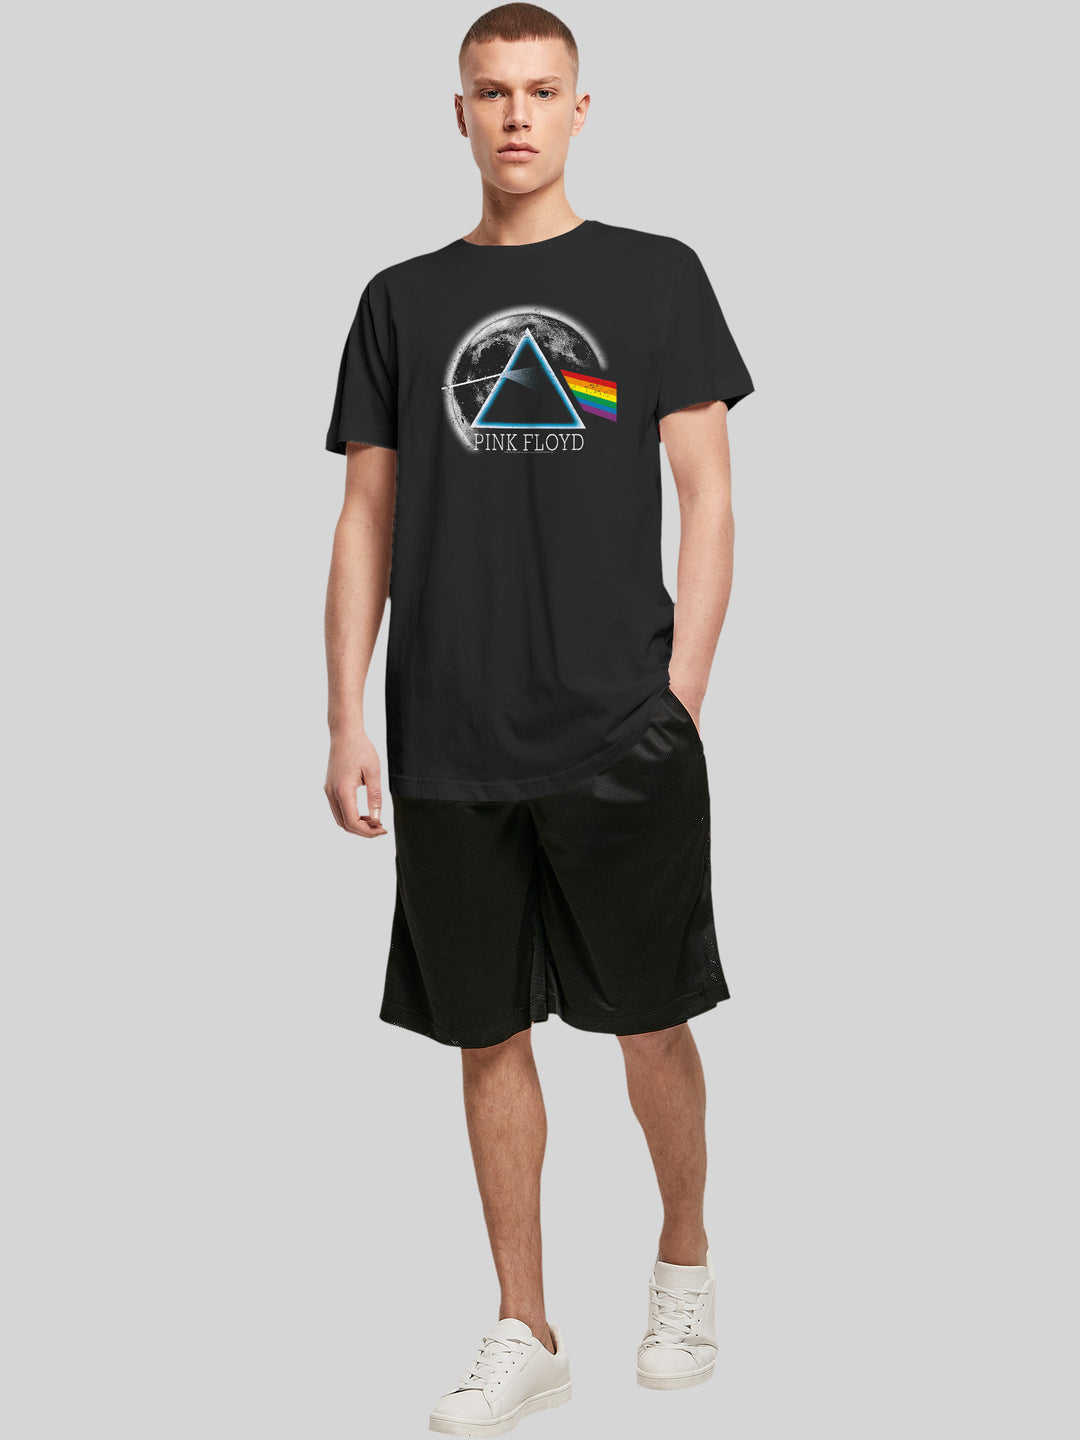 Pink Floyd T-Shirt | Dark Side of The Moon | Extra Long Men T Shirt